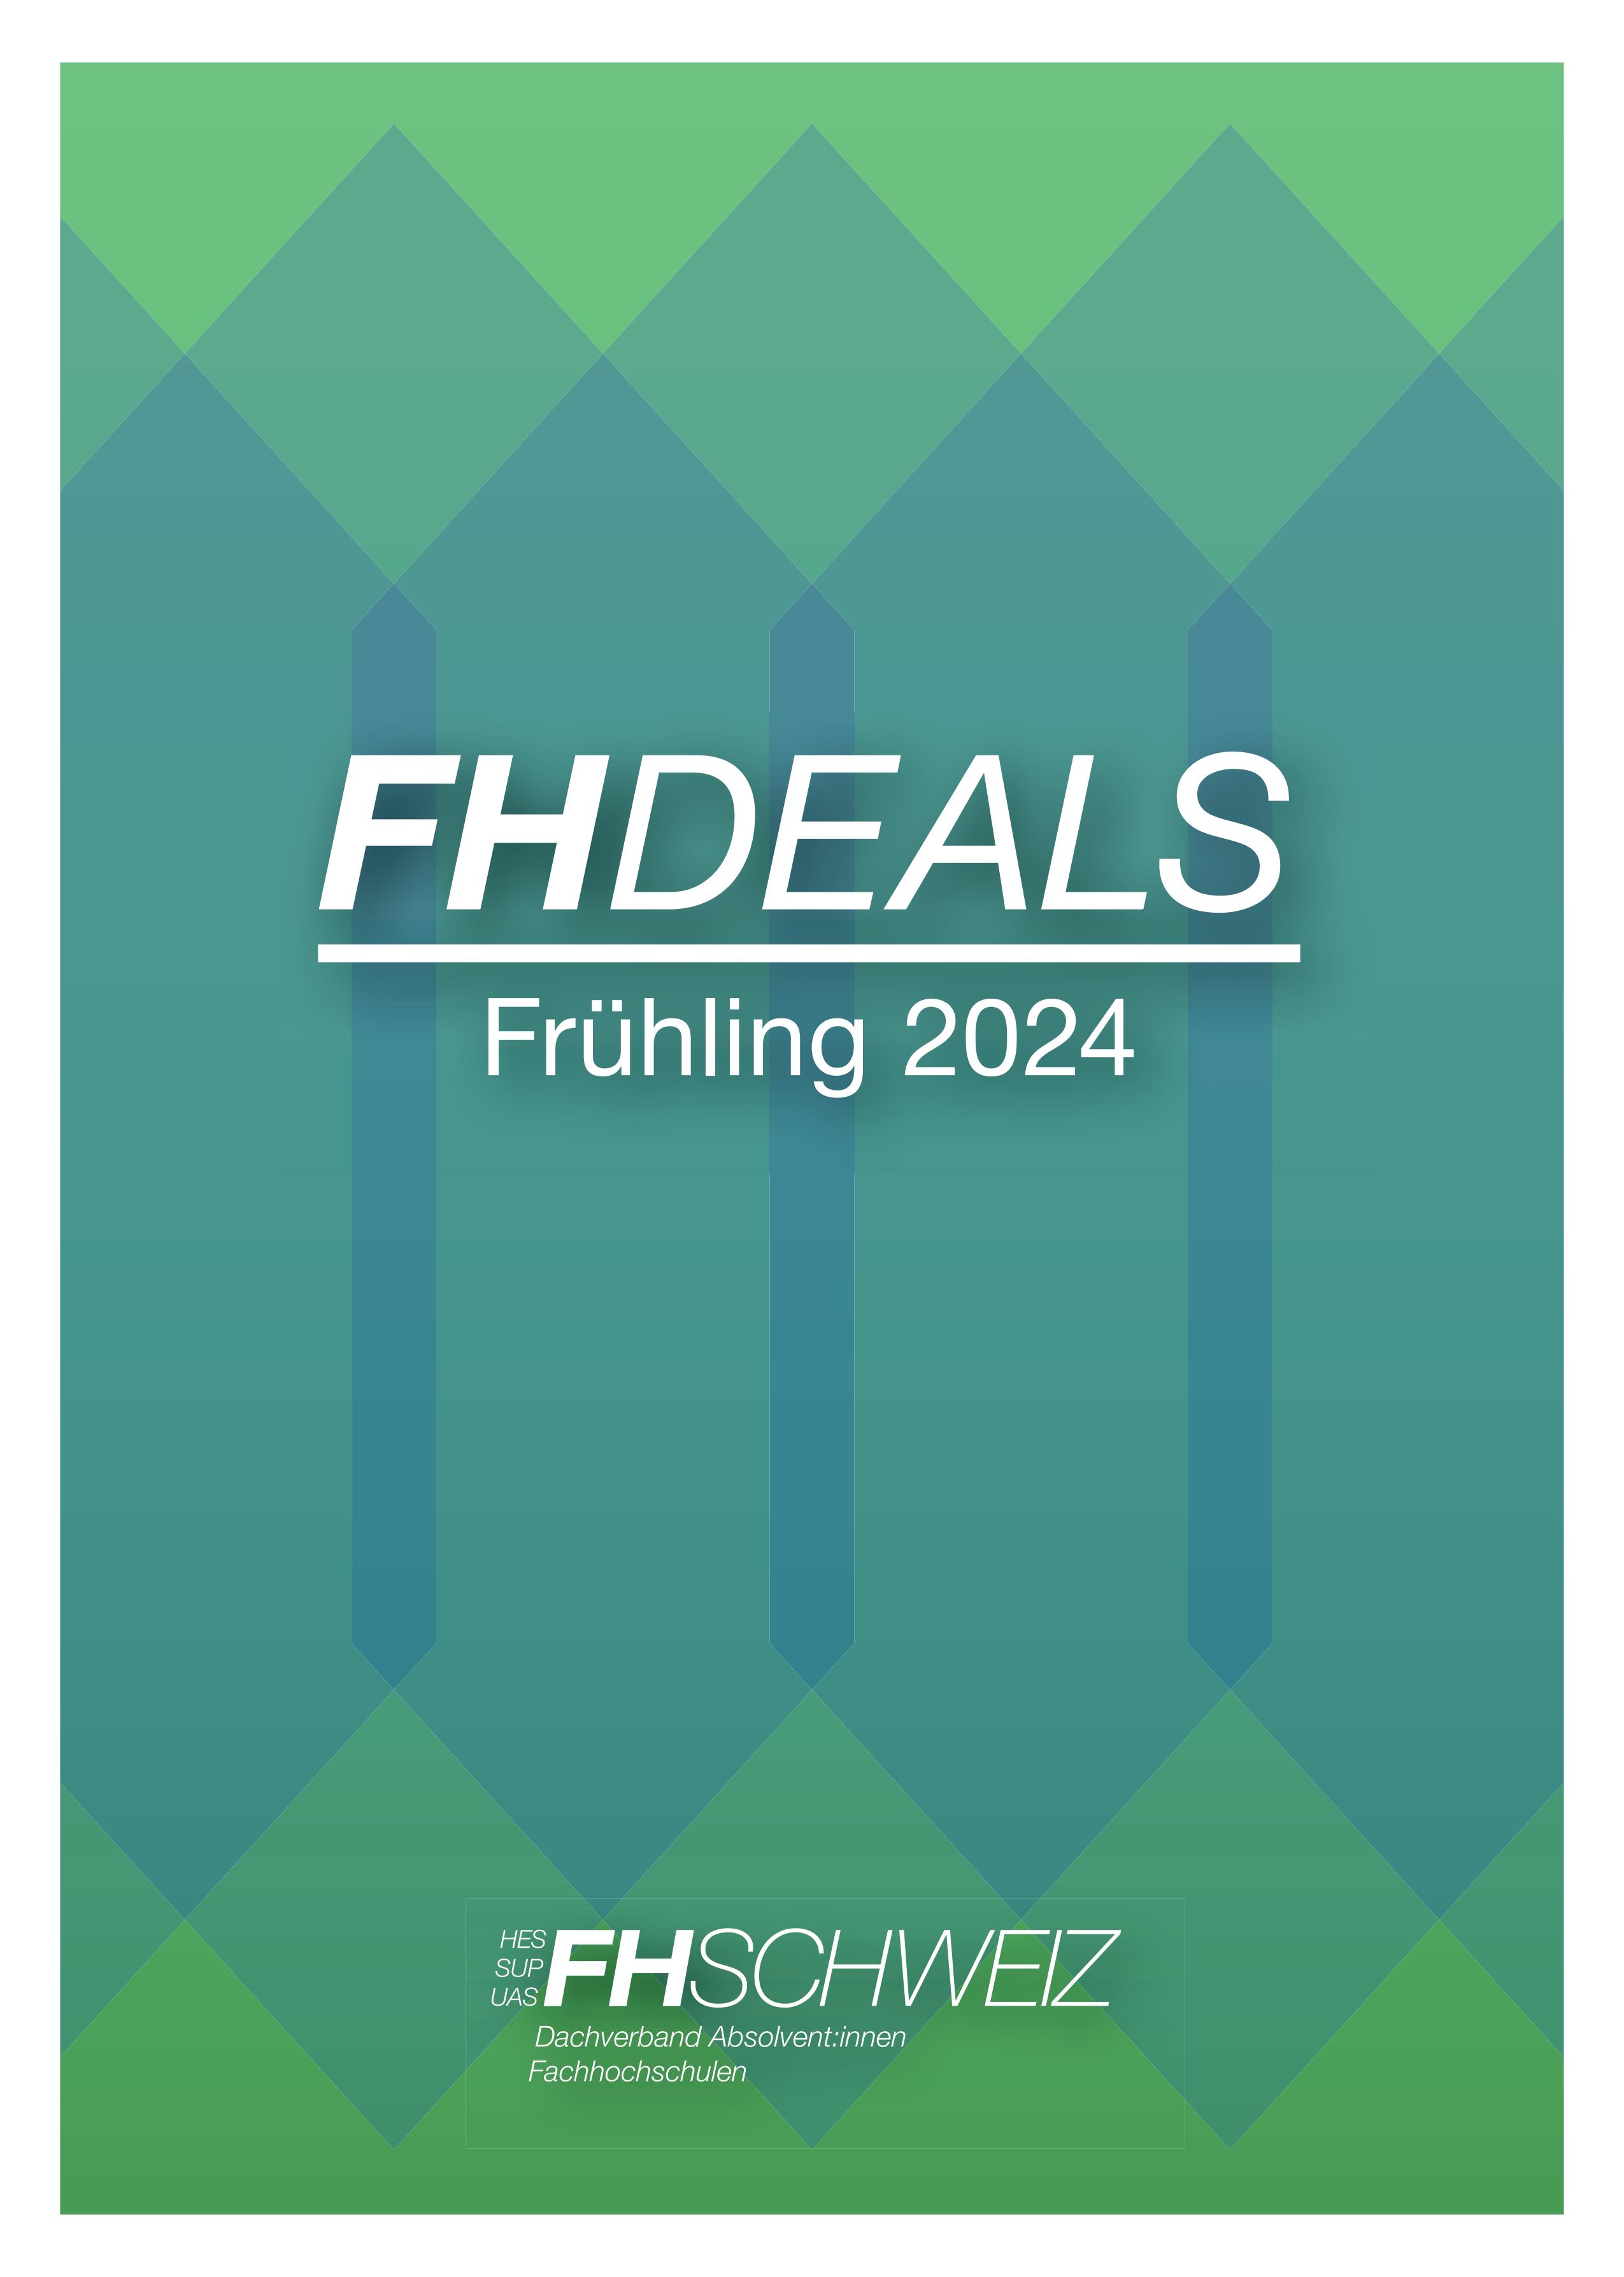 FH-Deals Frühling 2024